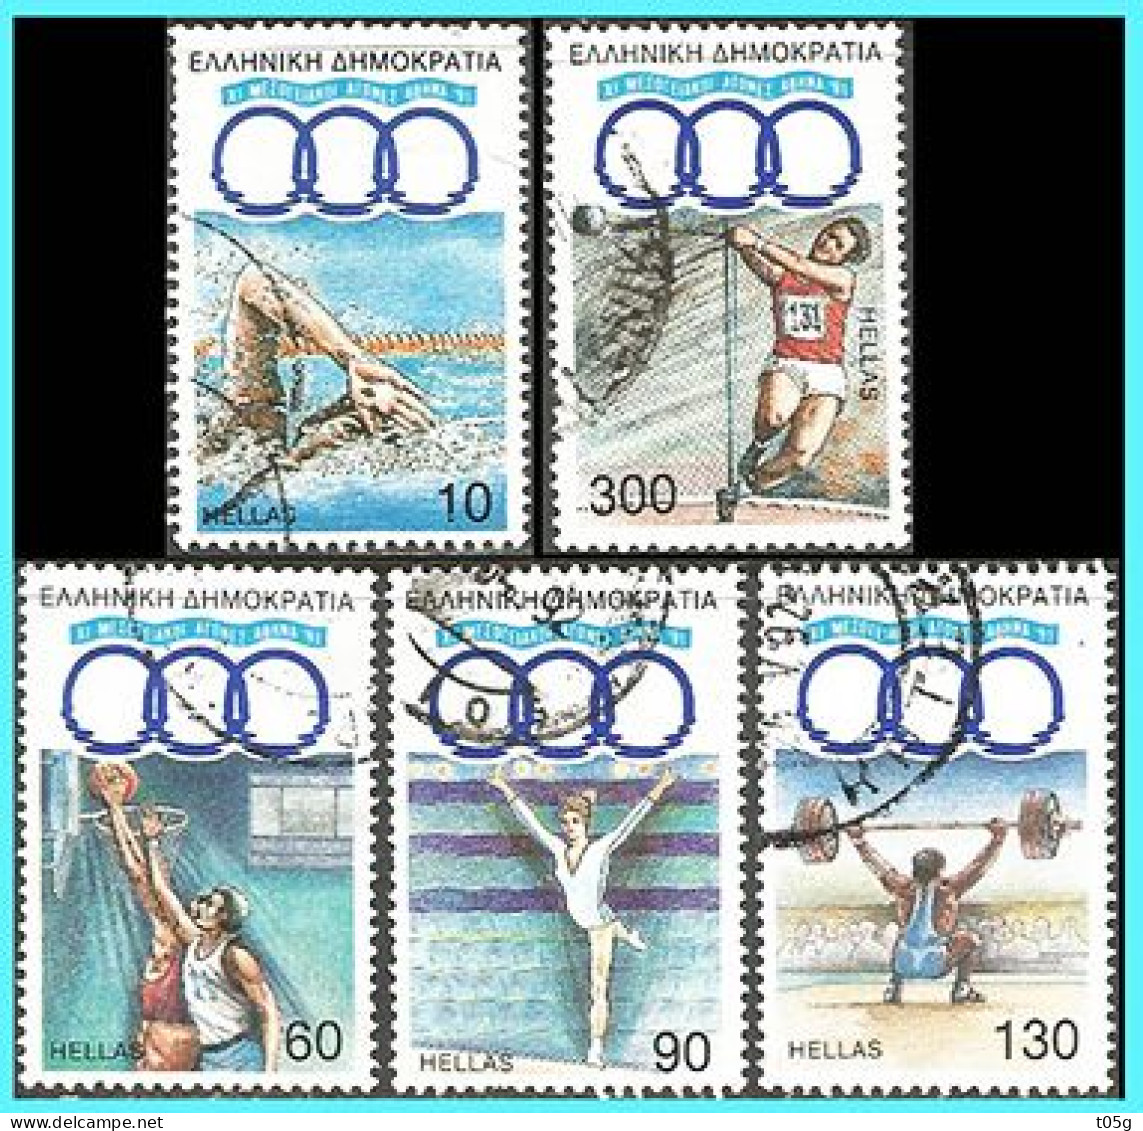 GREECE - GRECE- HELLAS 1991: Mediterranean Cames Compl. set used - Used Stamps